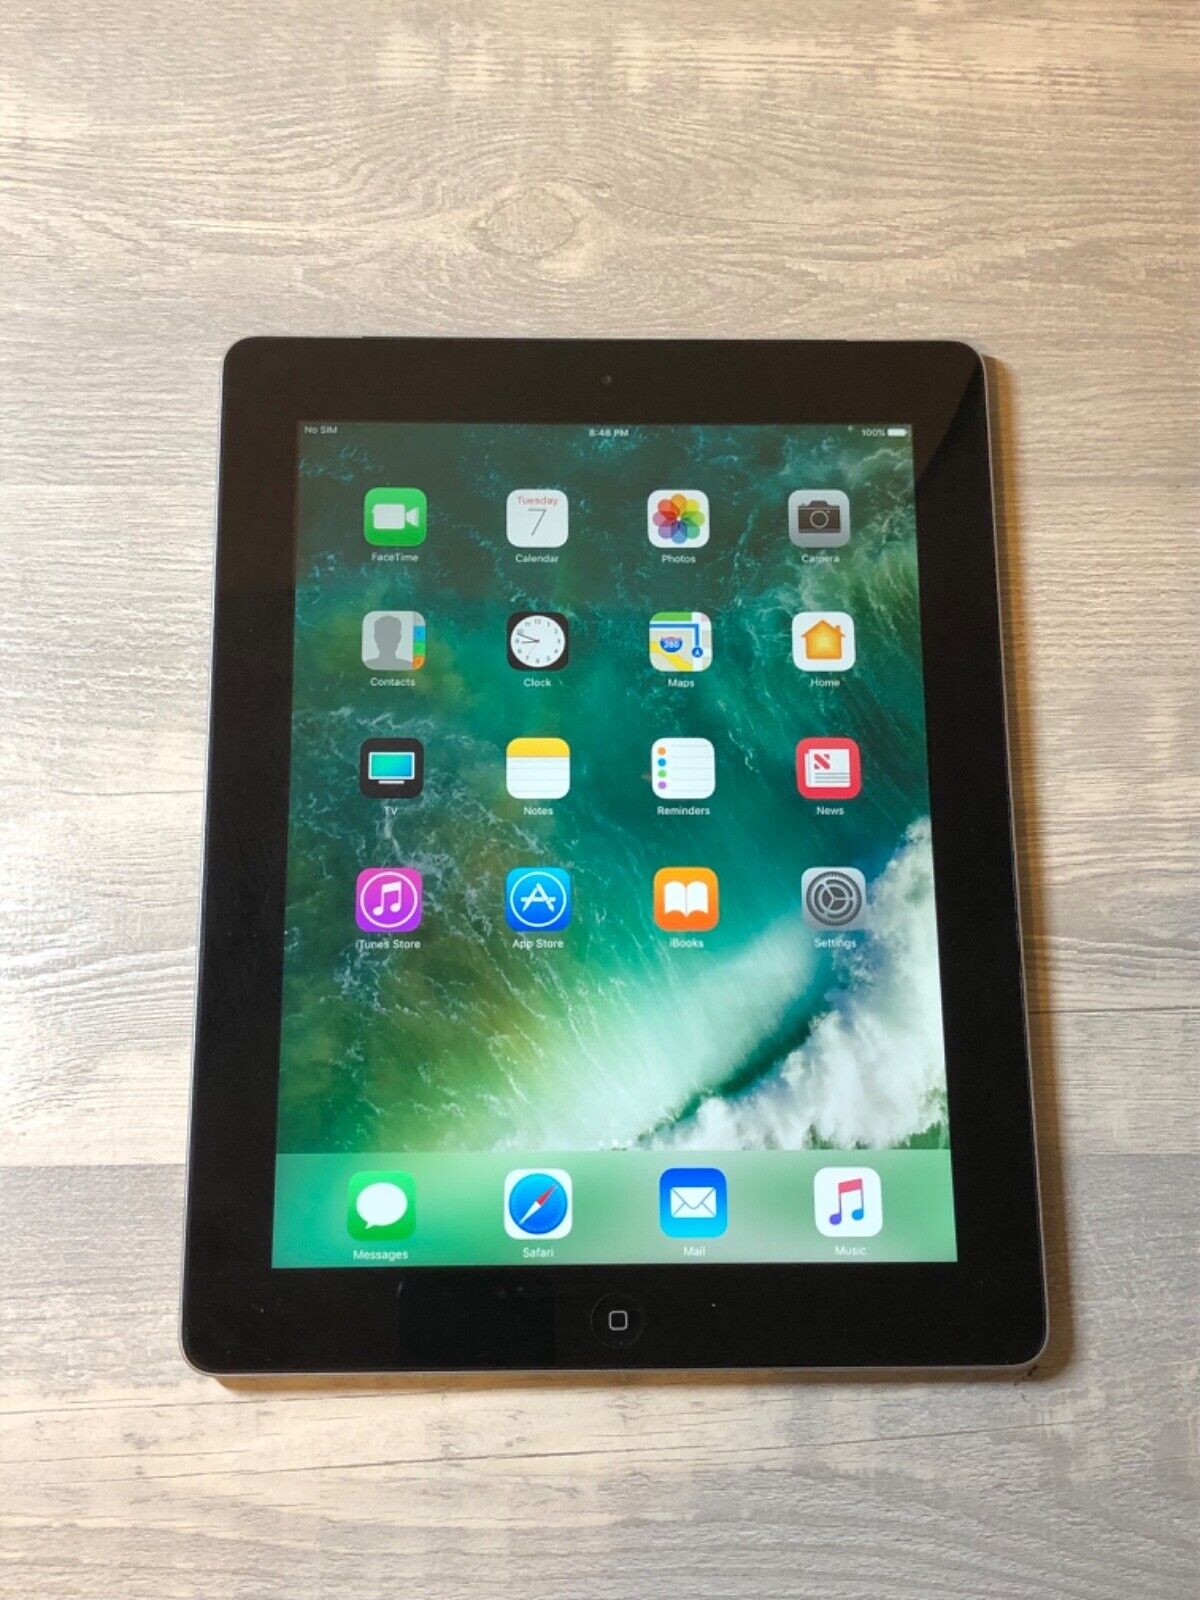 Apple iPad 4th Gen 9.7